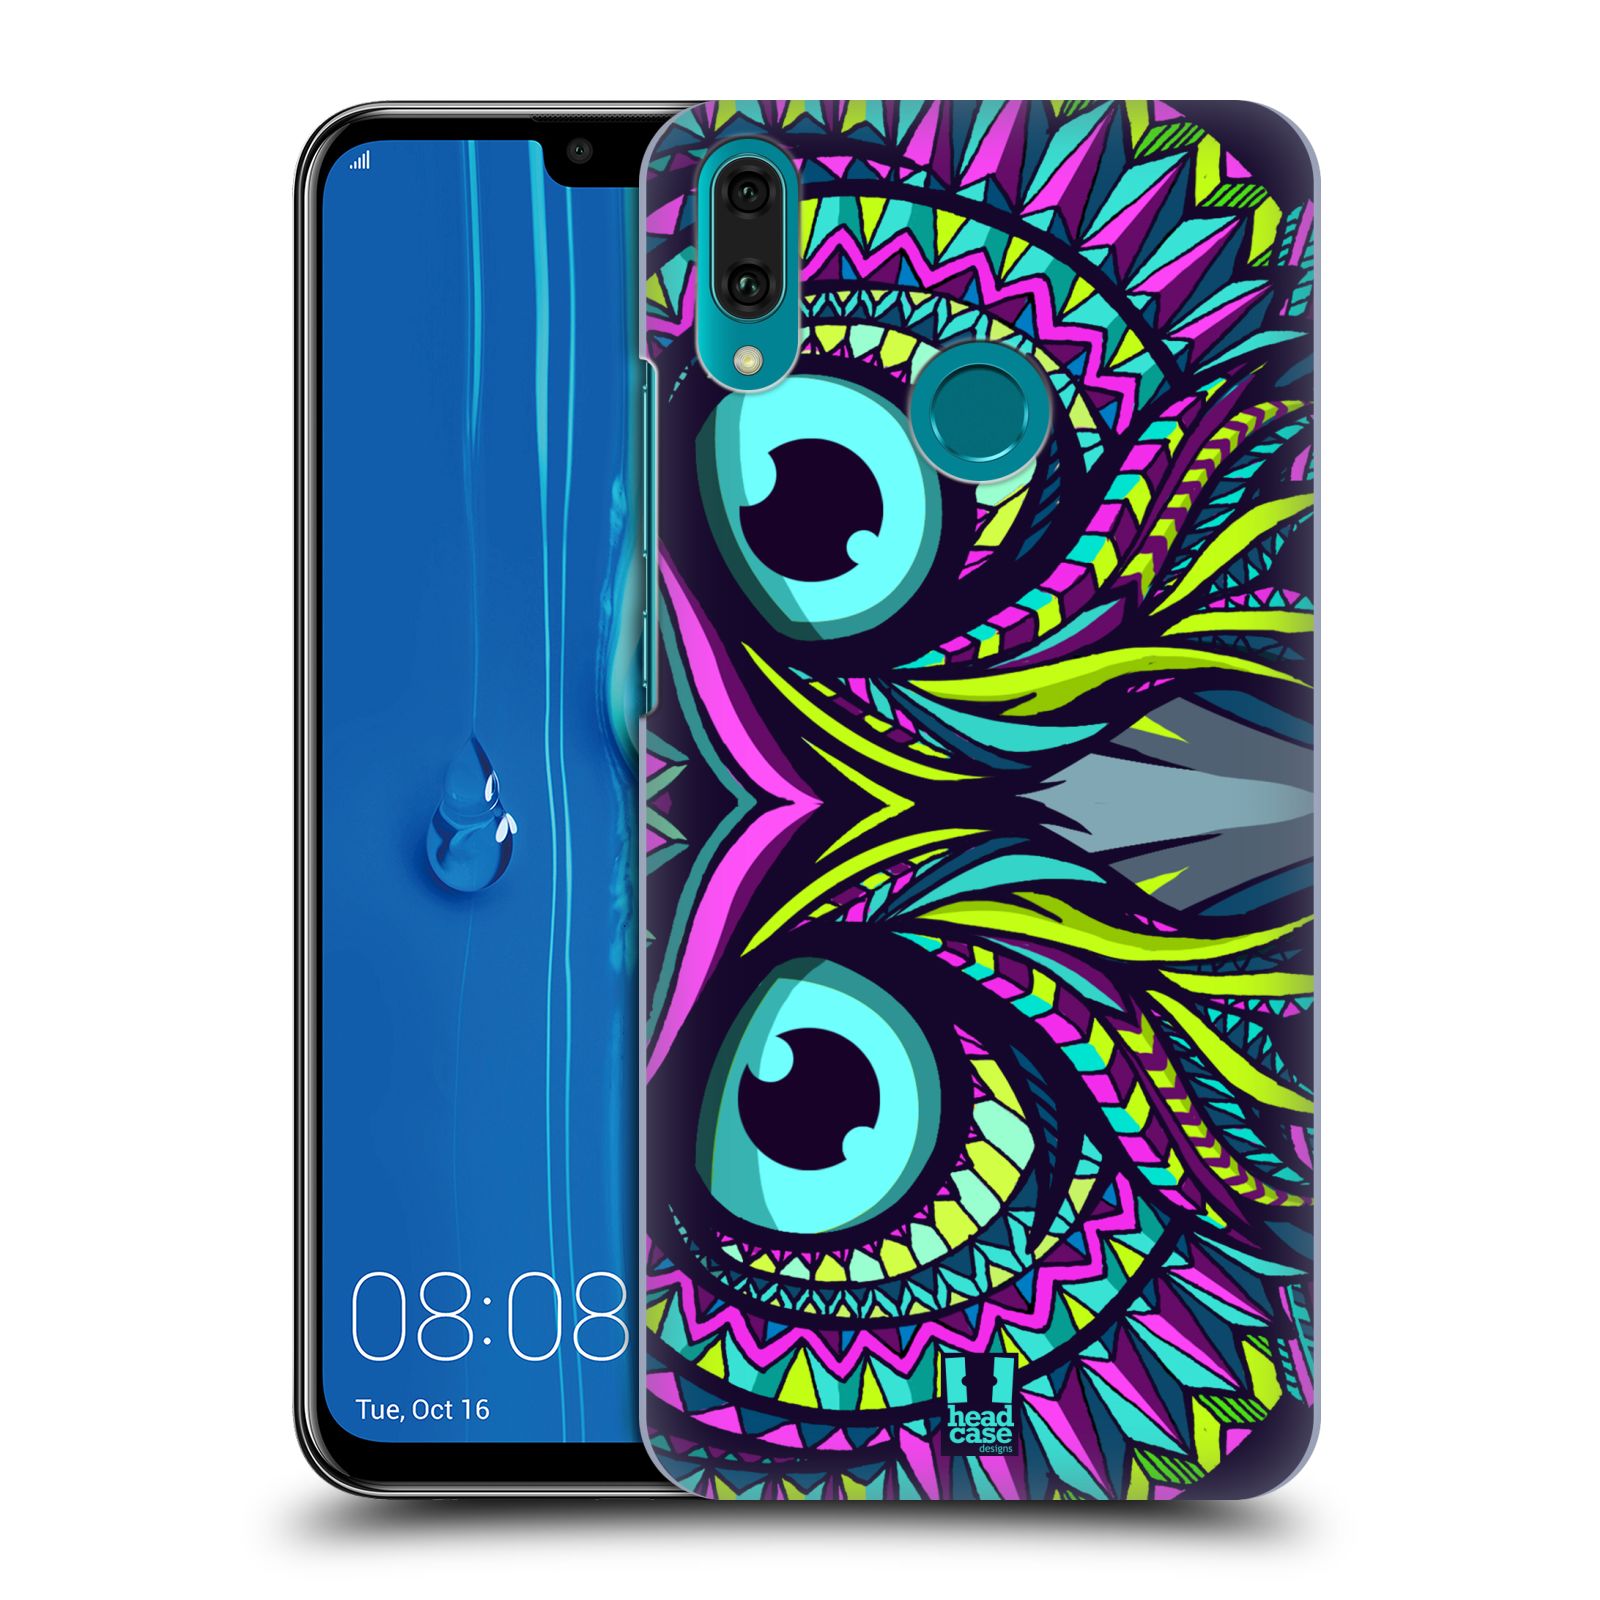 Pouzdro na mobil Huawei Y9 2019 - HEAD CASE - vzor Aztécký motiv zvíře sova